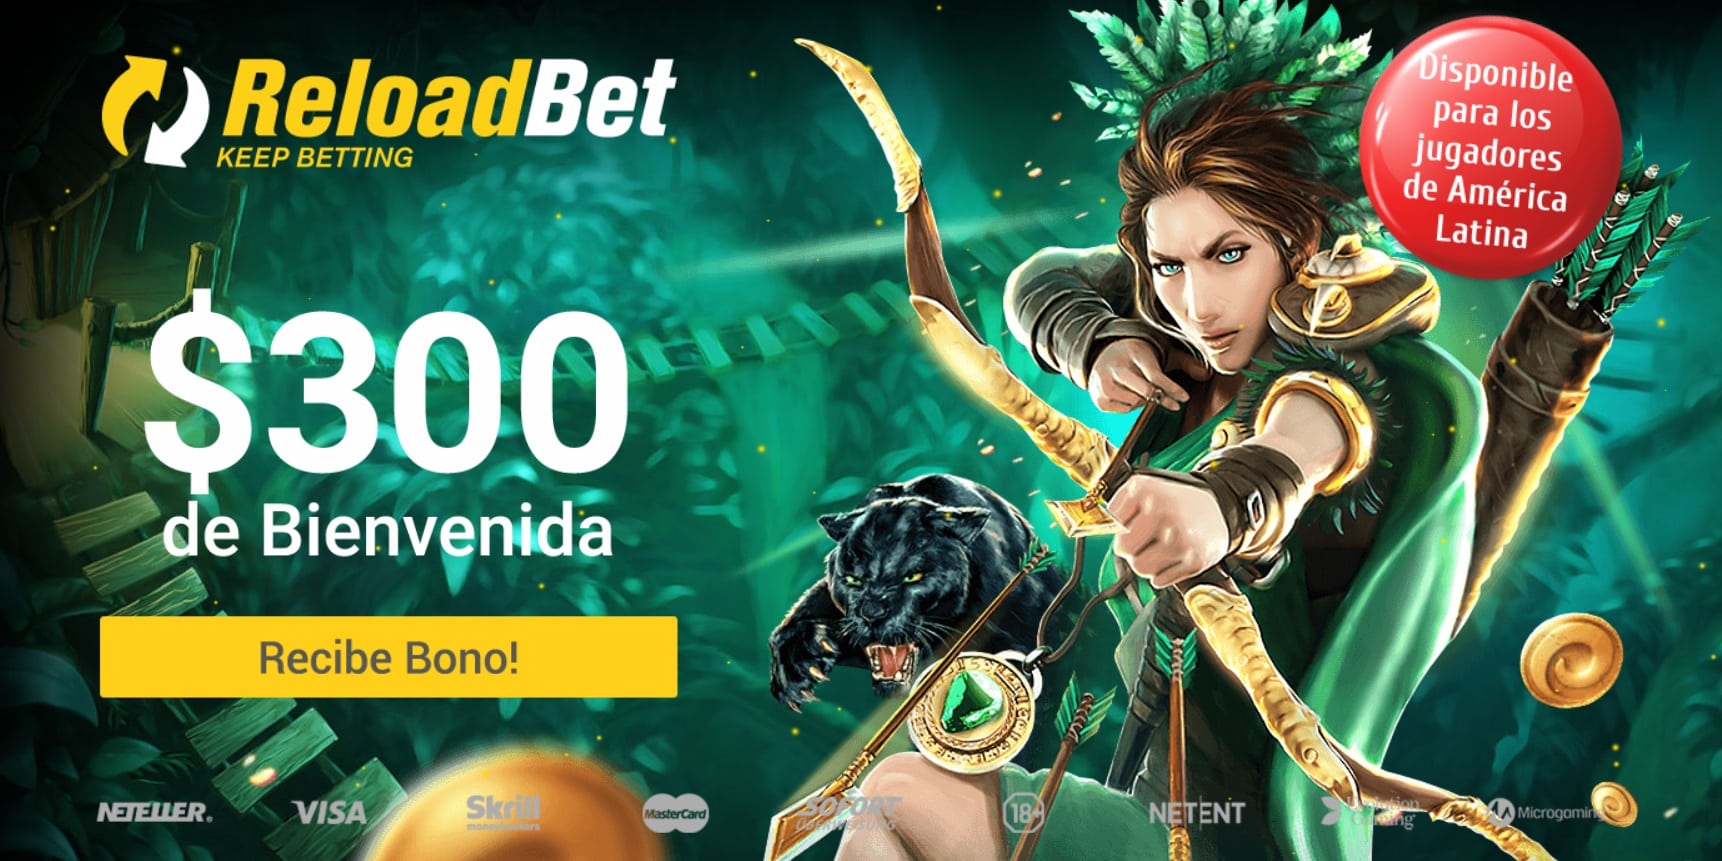 casinos online argentina reload bet